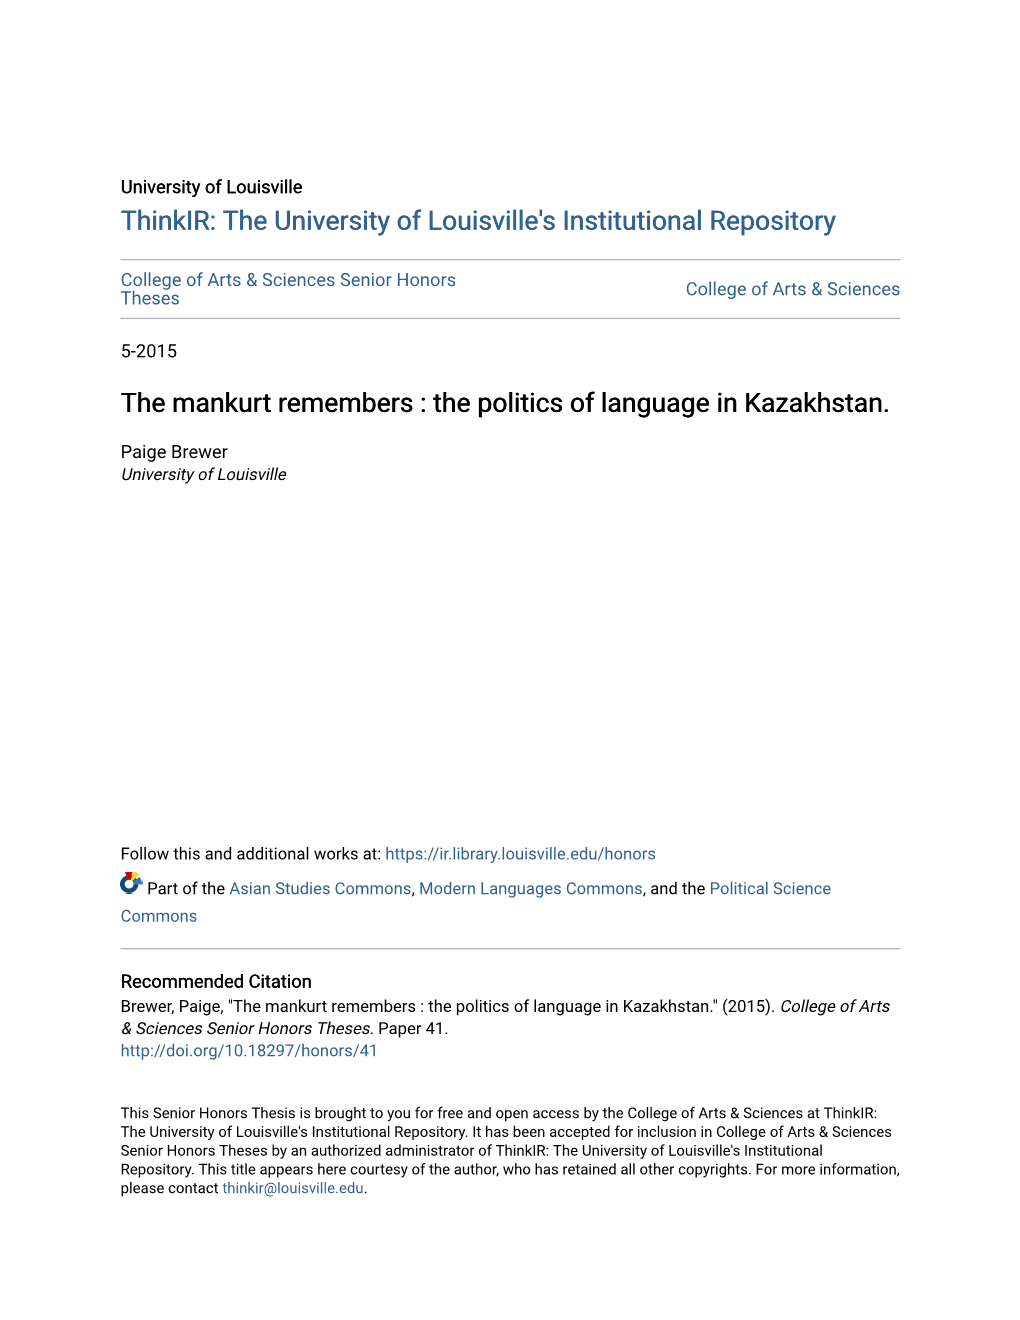 The Mankurt Remembers : the Politics of Language in Kazakhstan